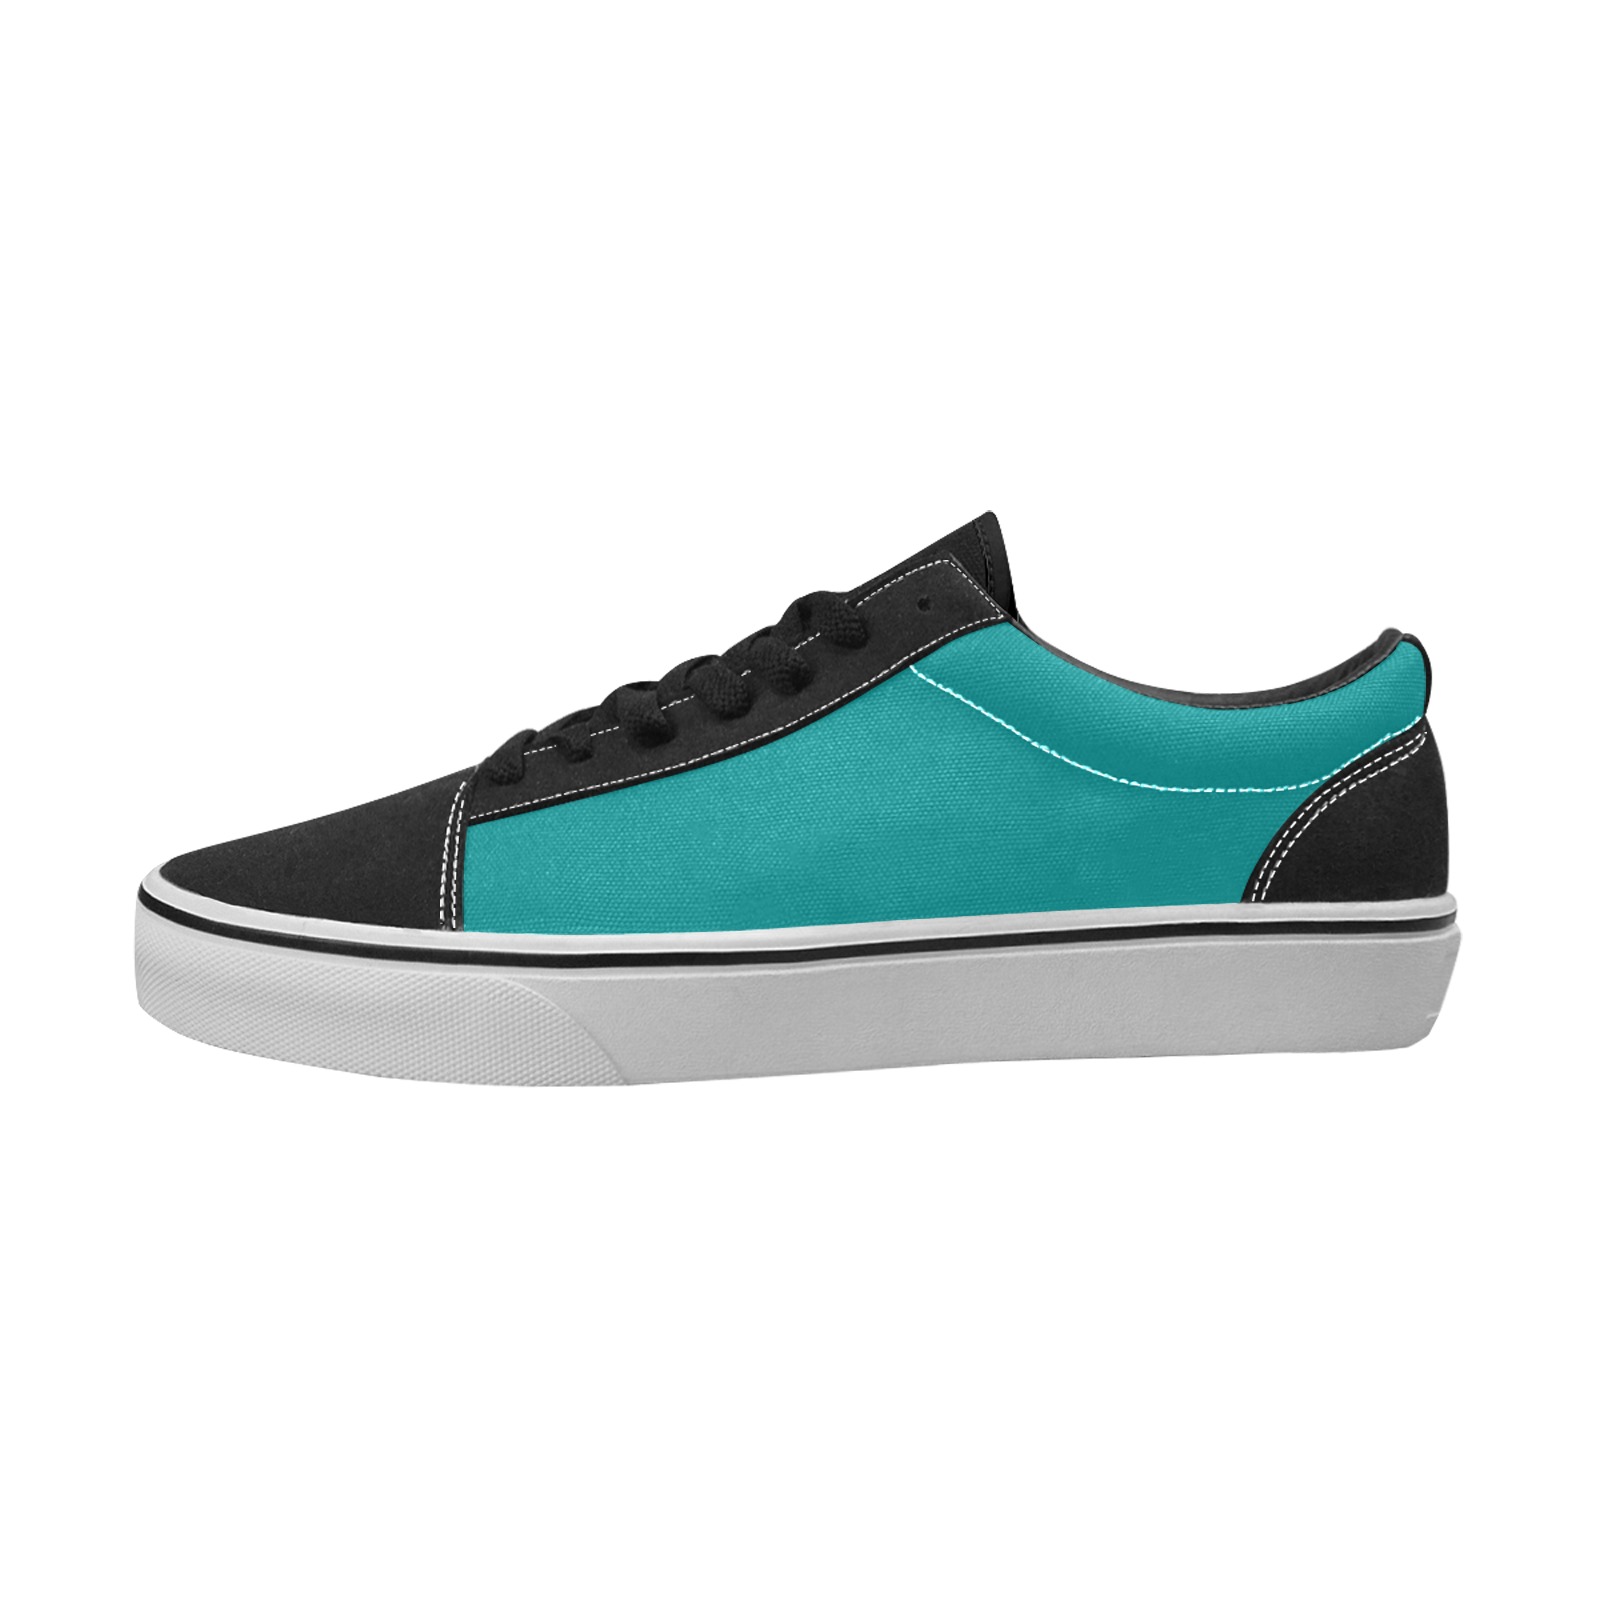 color teal Men's Low Top Skateboarding Shoes (Model E001-2)